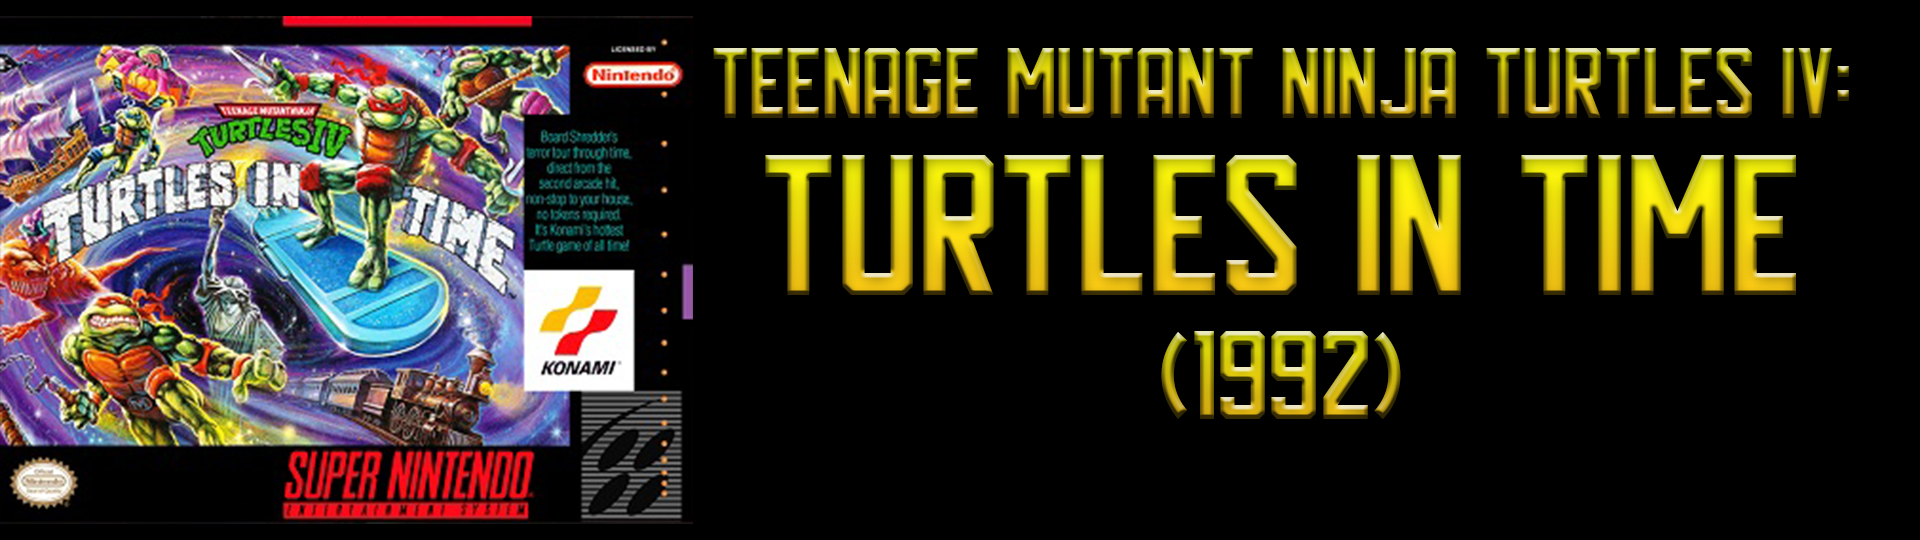 Teenage Mutant Ninja Turtles IV:  Turtles in Time